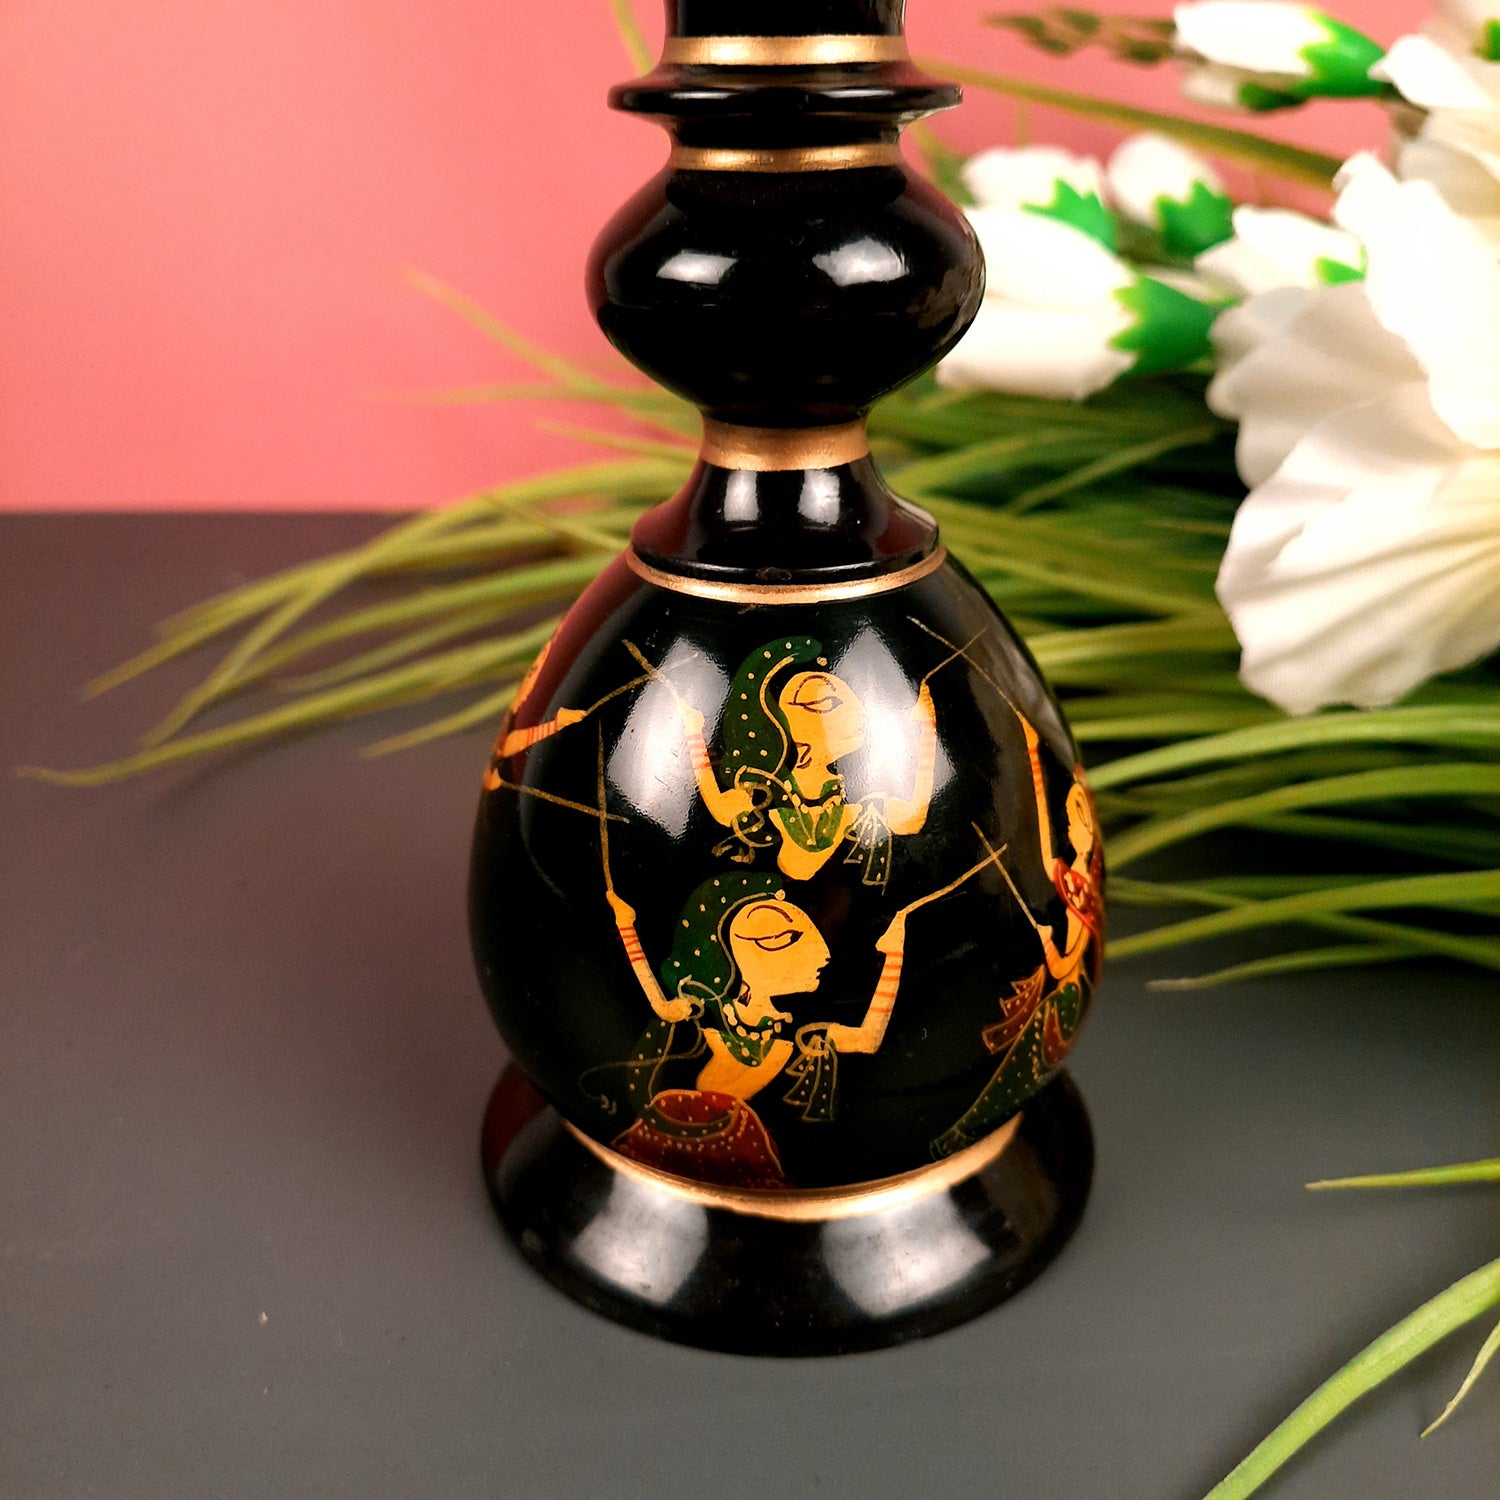 Flower Pot | Wooden Decorative Flower Vase - For Table, Home Decor & Gifts - 9 Inch - Apkamart